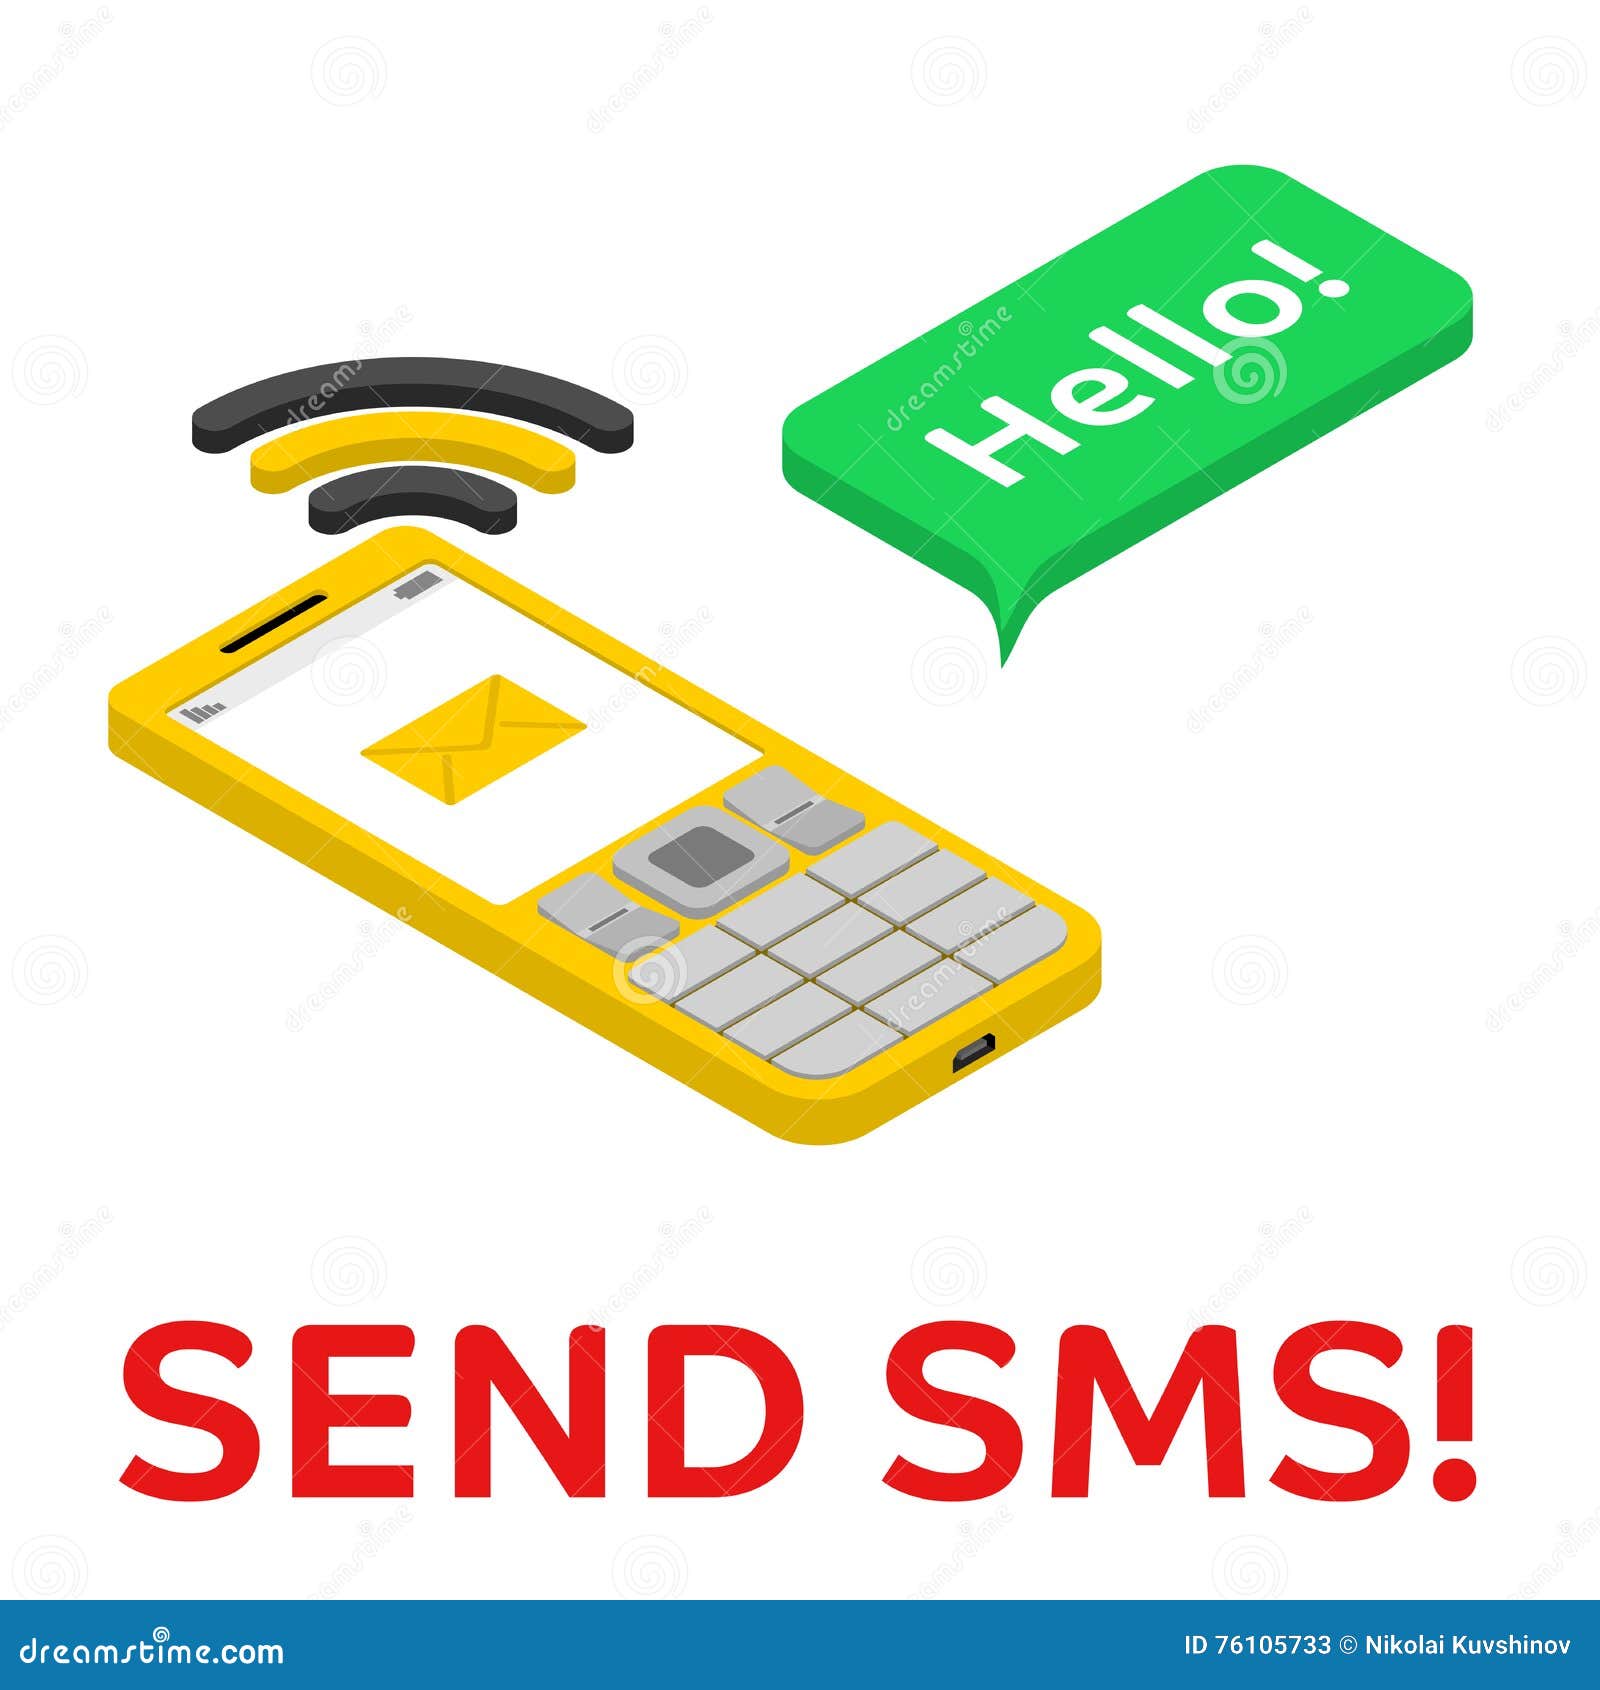 Sms send we. Send SMS. Ohon send SMS PNG.